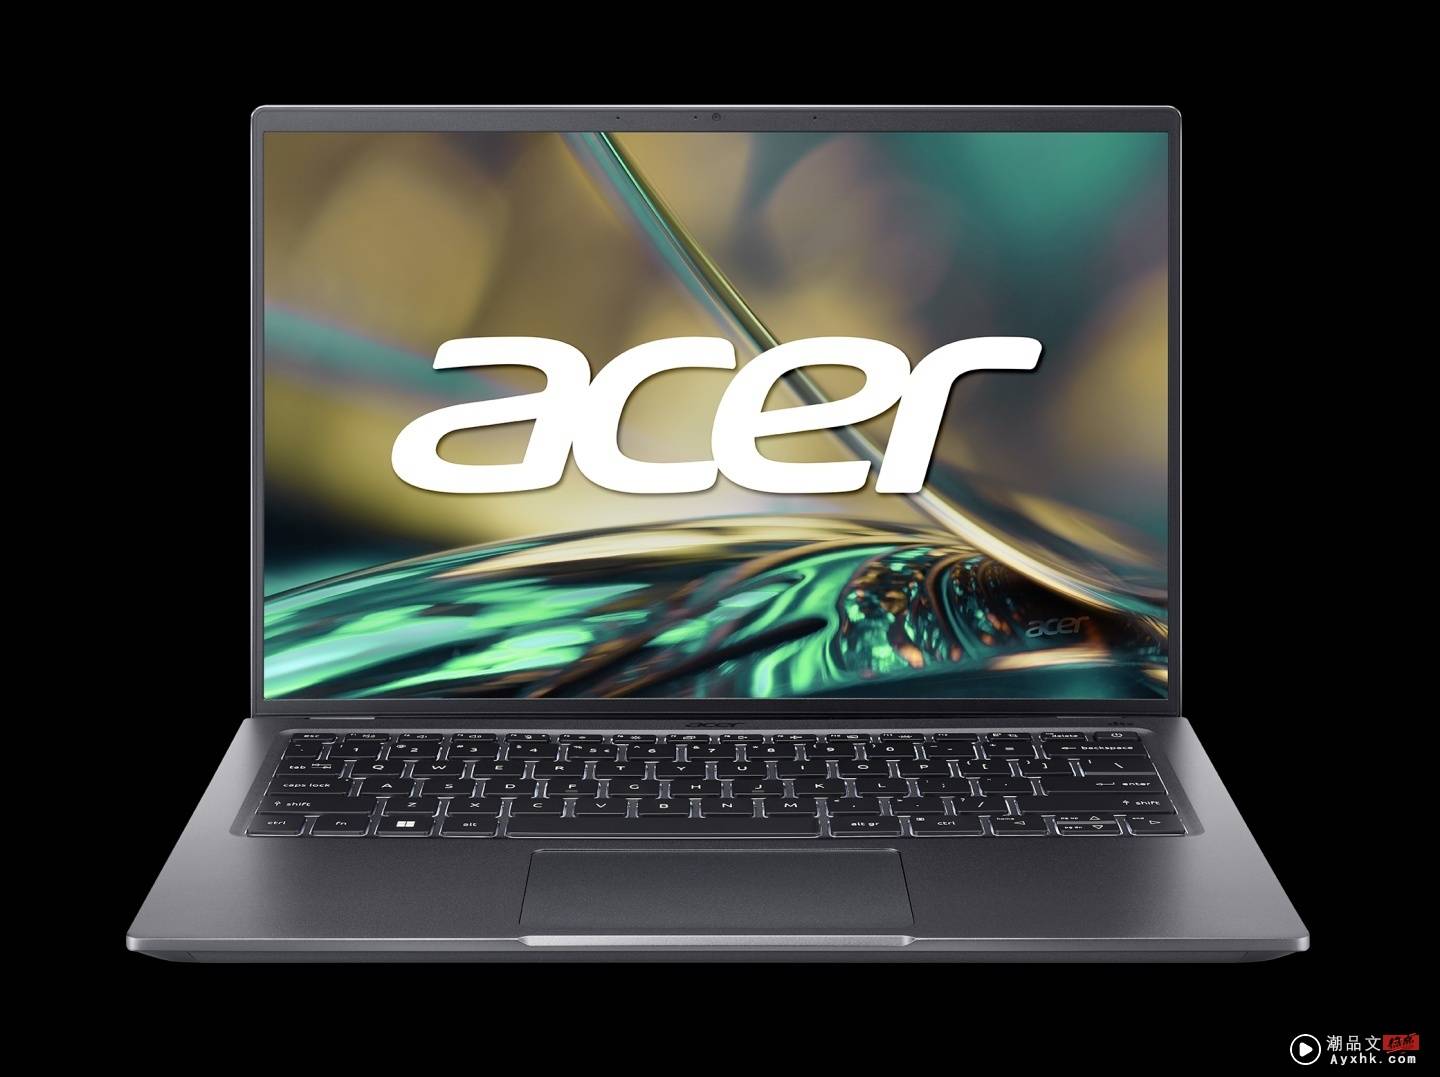 Acer 新一代 Swift 笔电亮相！搭载第 12 代 Intel Core 处理器，主打轻薄高效能，还加入了环保元素！ 数码科技 图2张